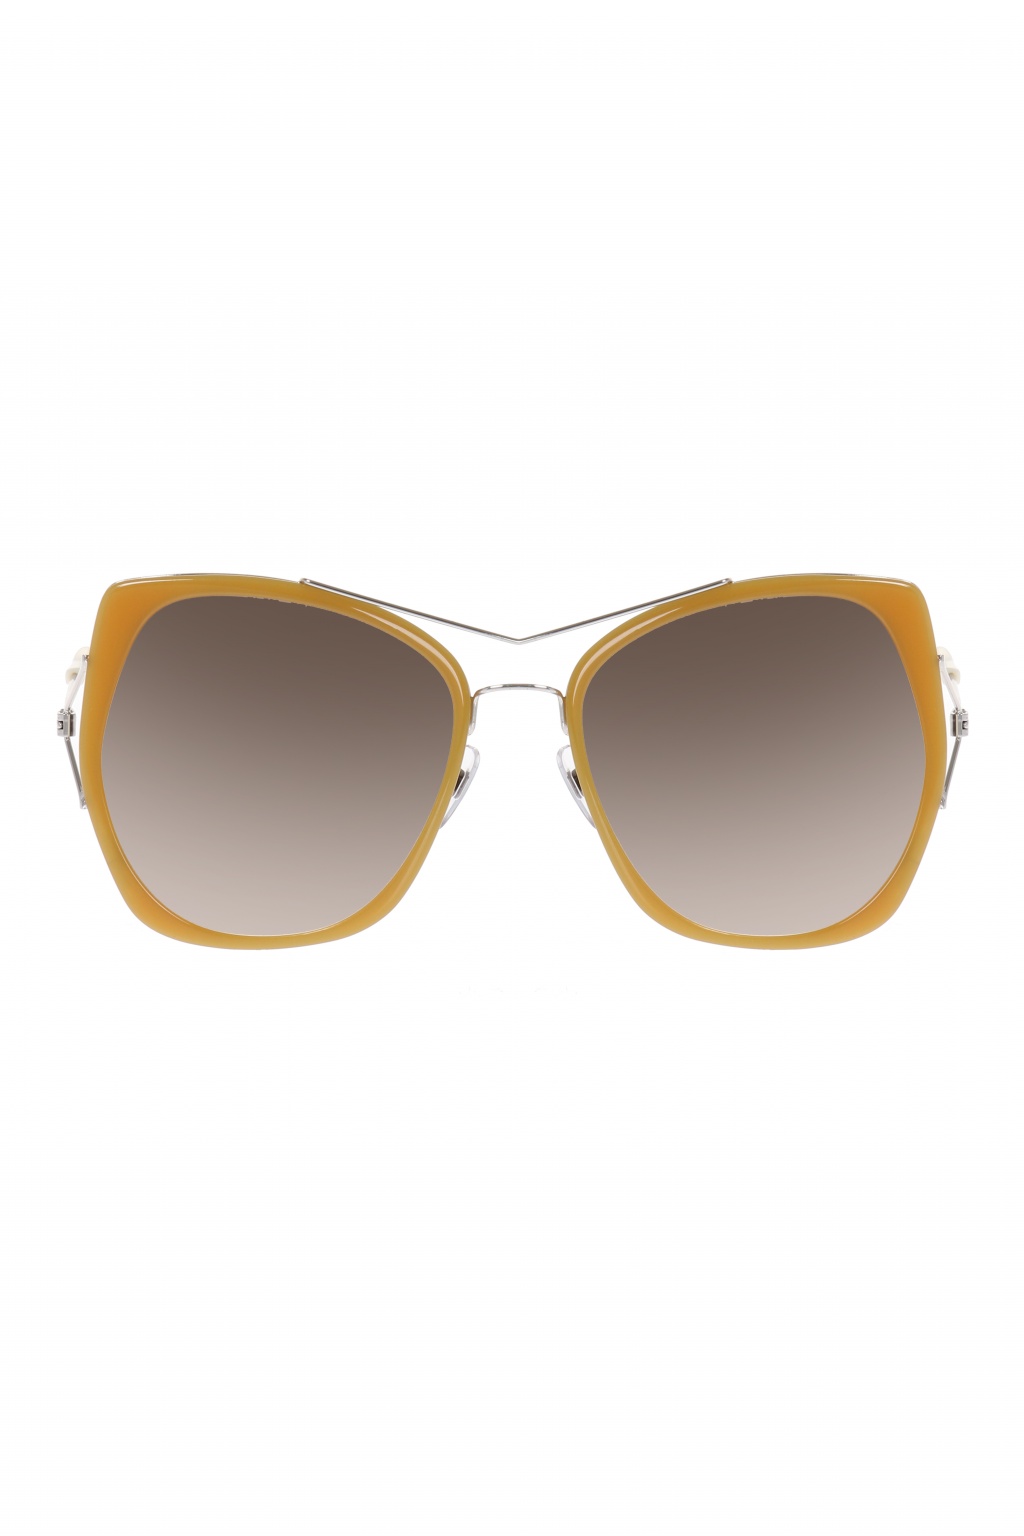 Sunglasses Givenchy - Vitkac Canada